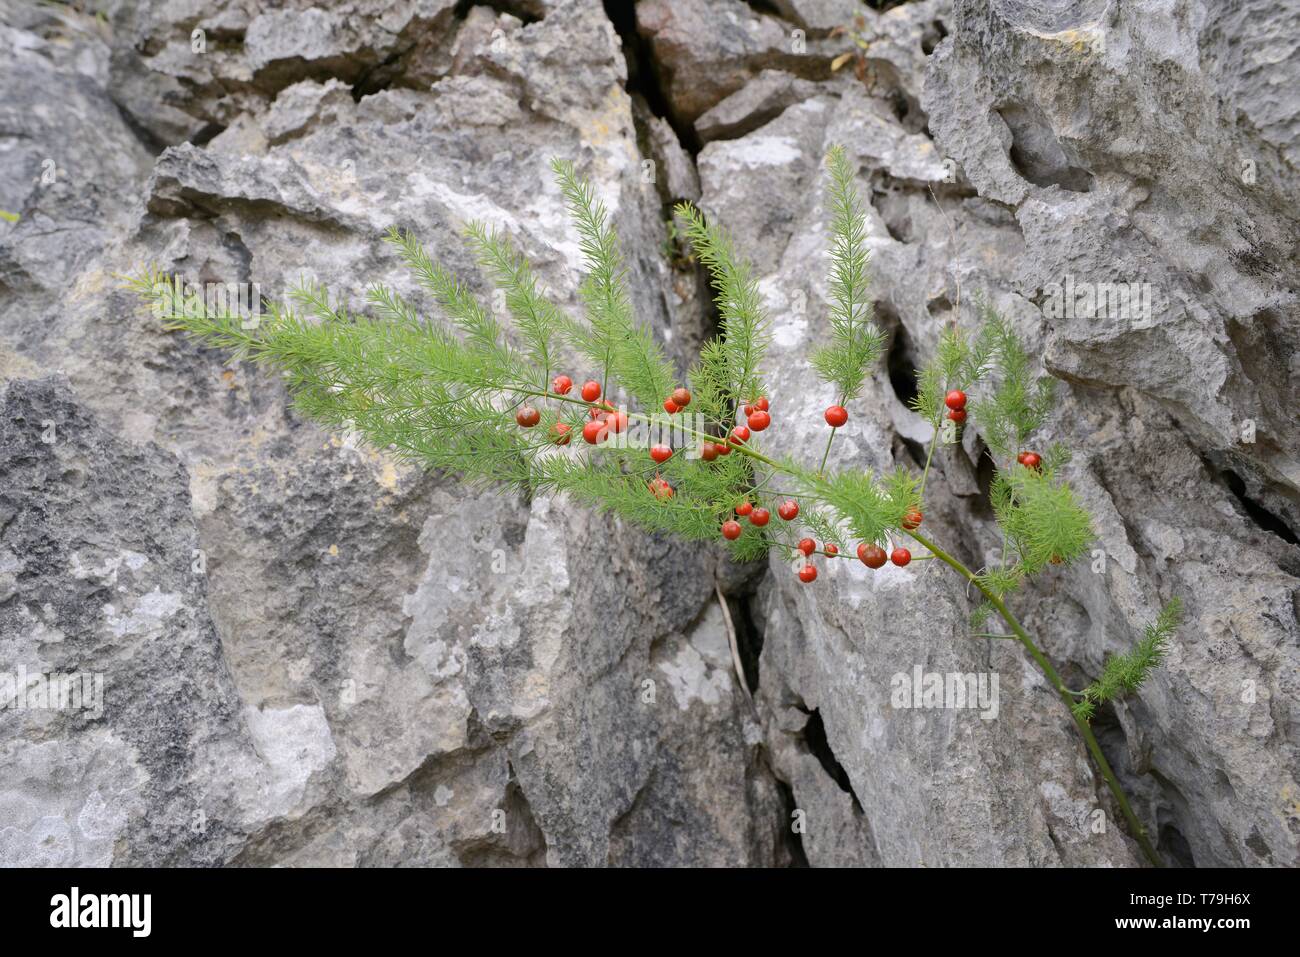 Wild asparagus (Asparagus officinalis) with red fruits, growing among limestone rocks on coastal headland, near Llanes, Asturias, Spain, August. Stock Photo